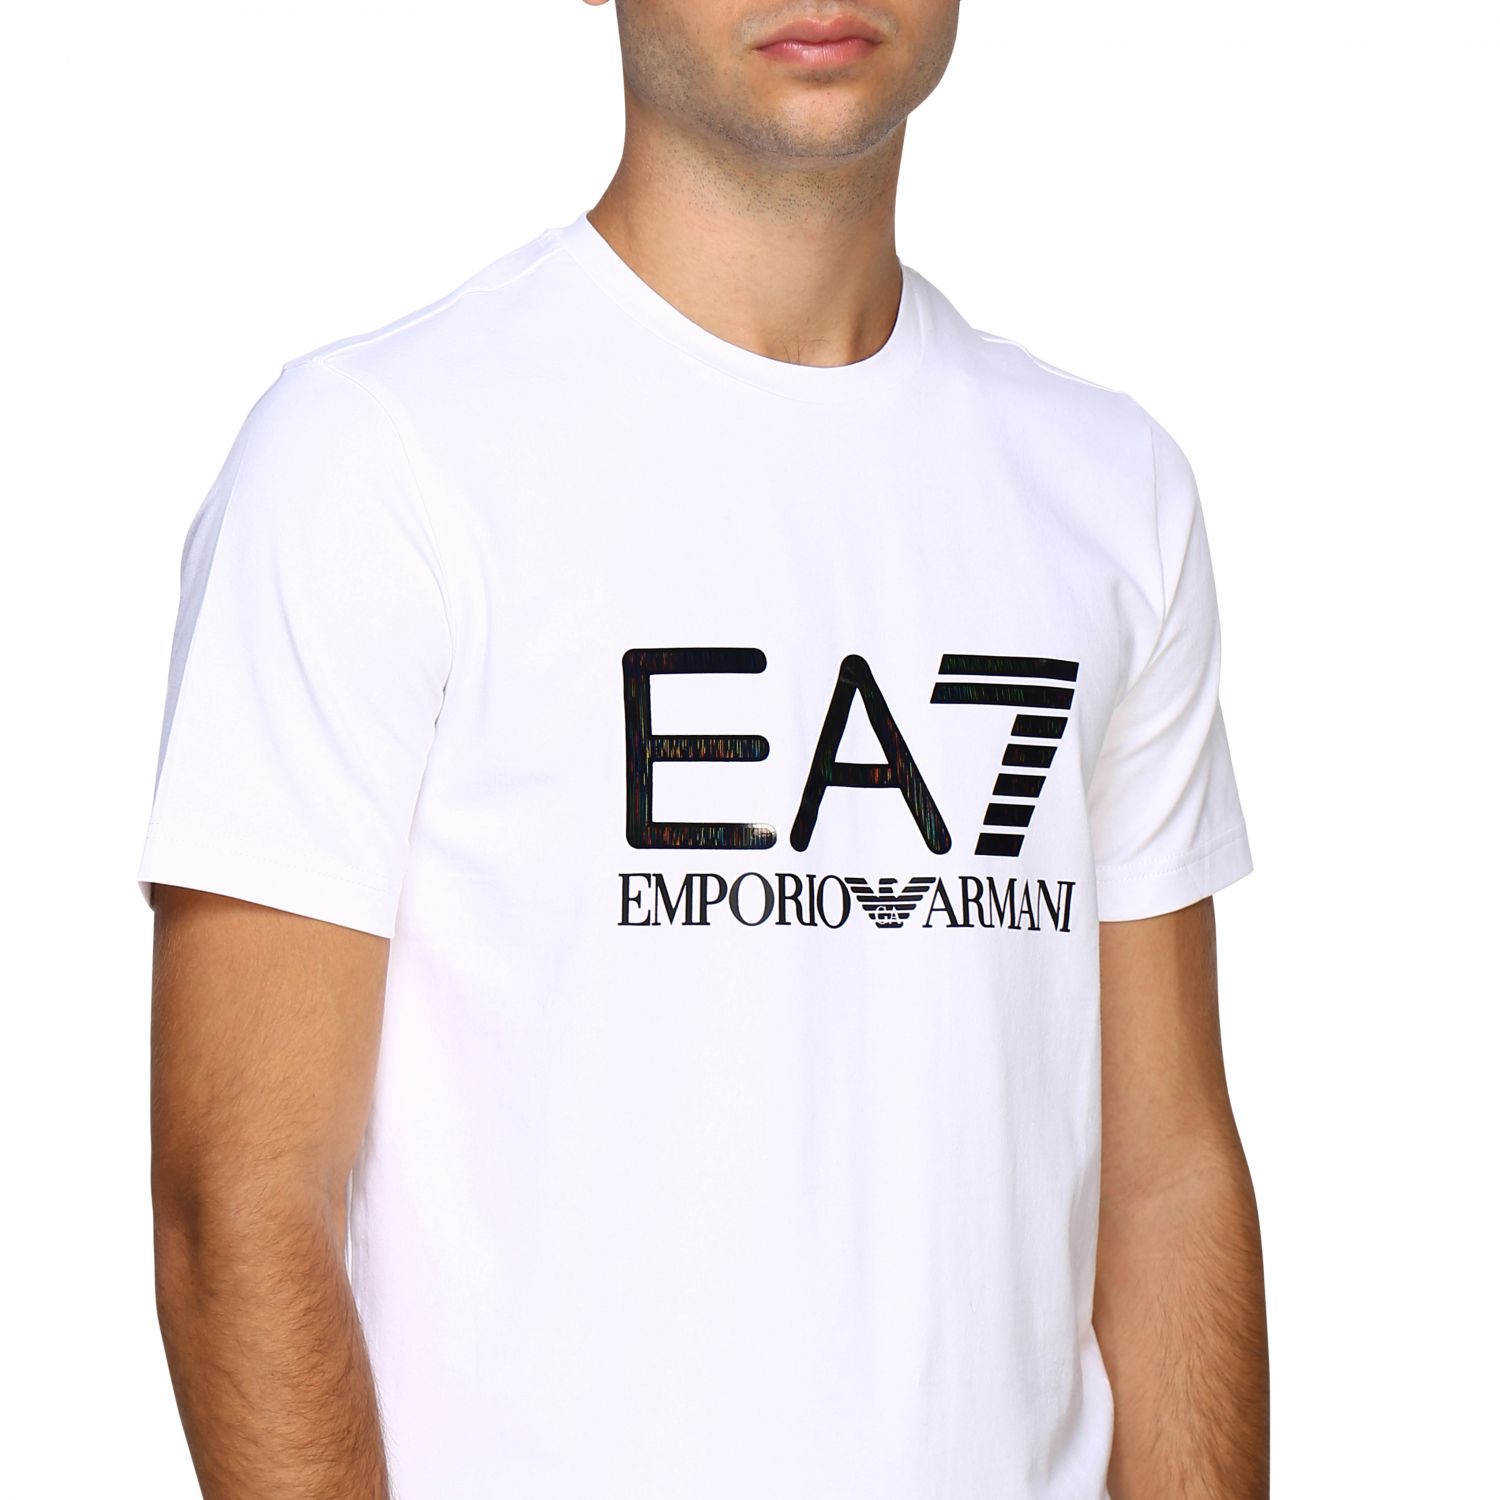 mens white ea7 t shirt